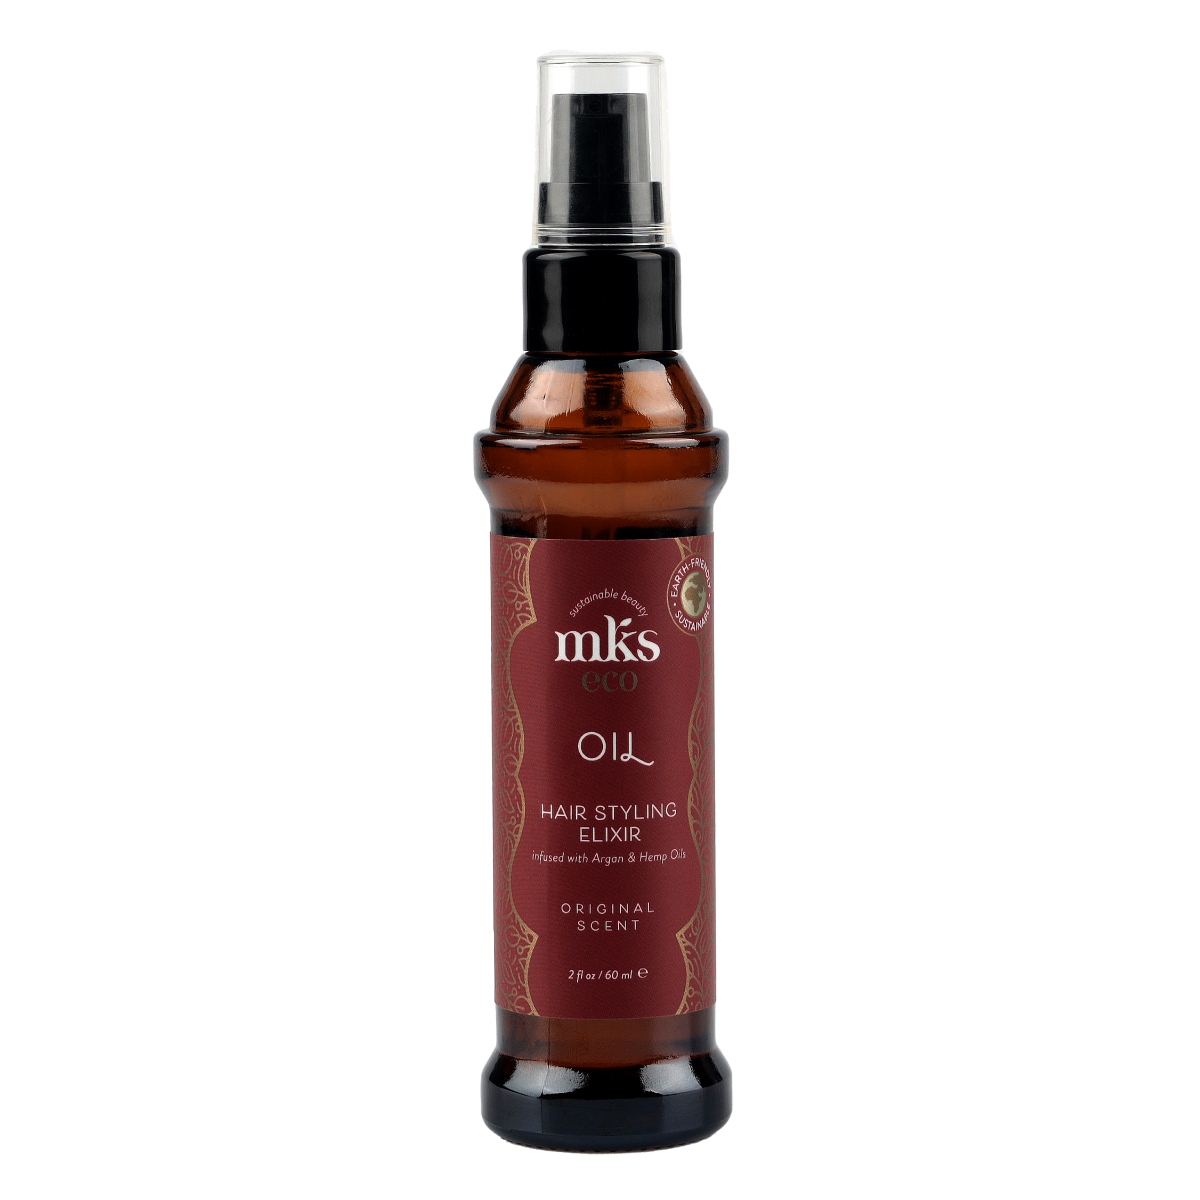 MKS eco Oil Hair Styling Elixir (2 oz, Original Scent)